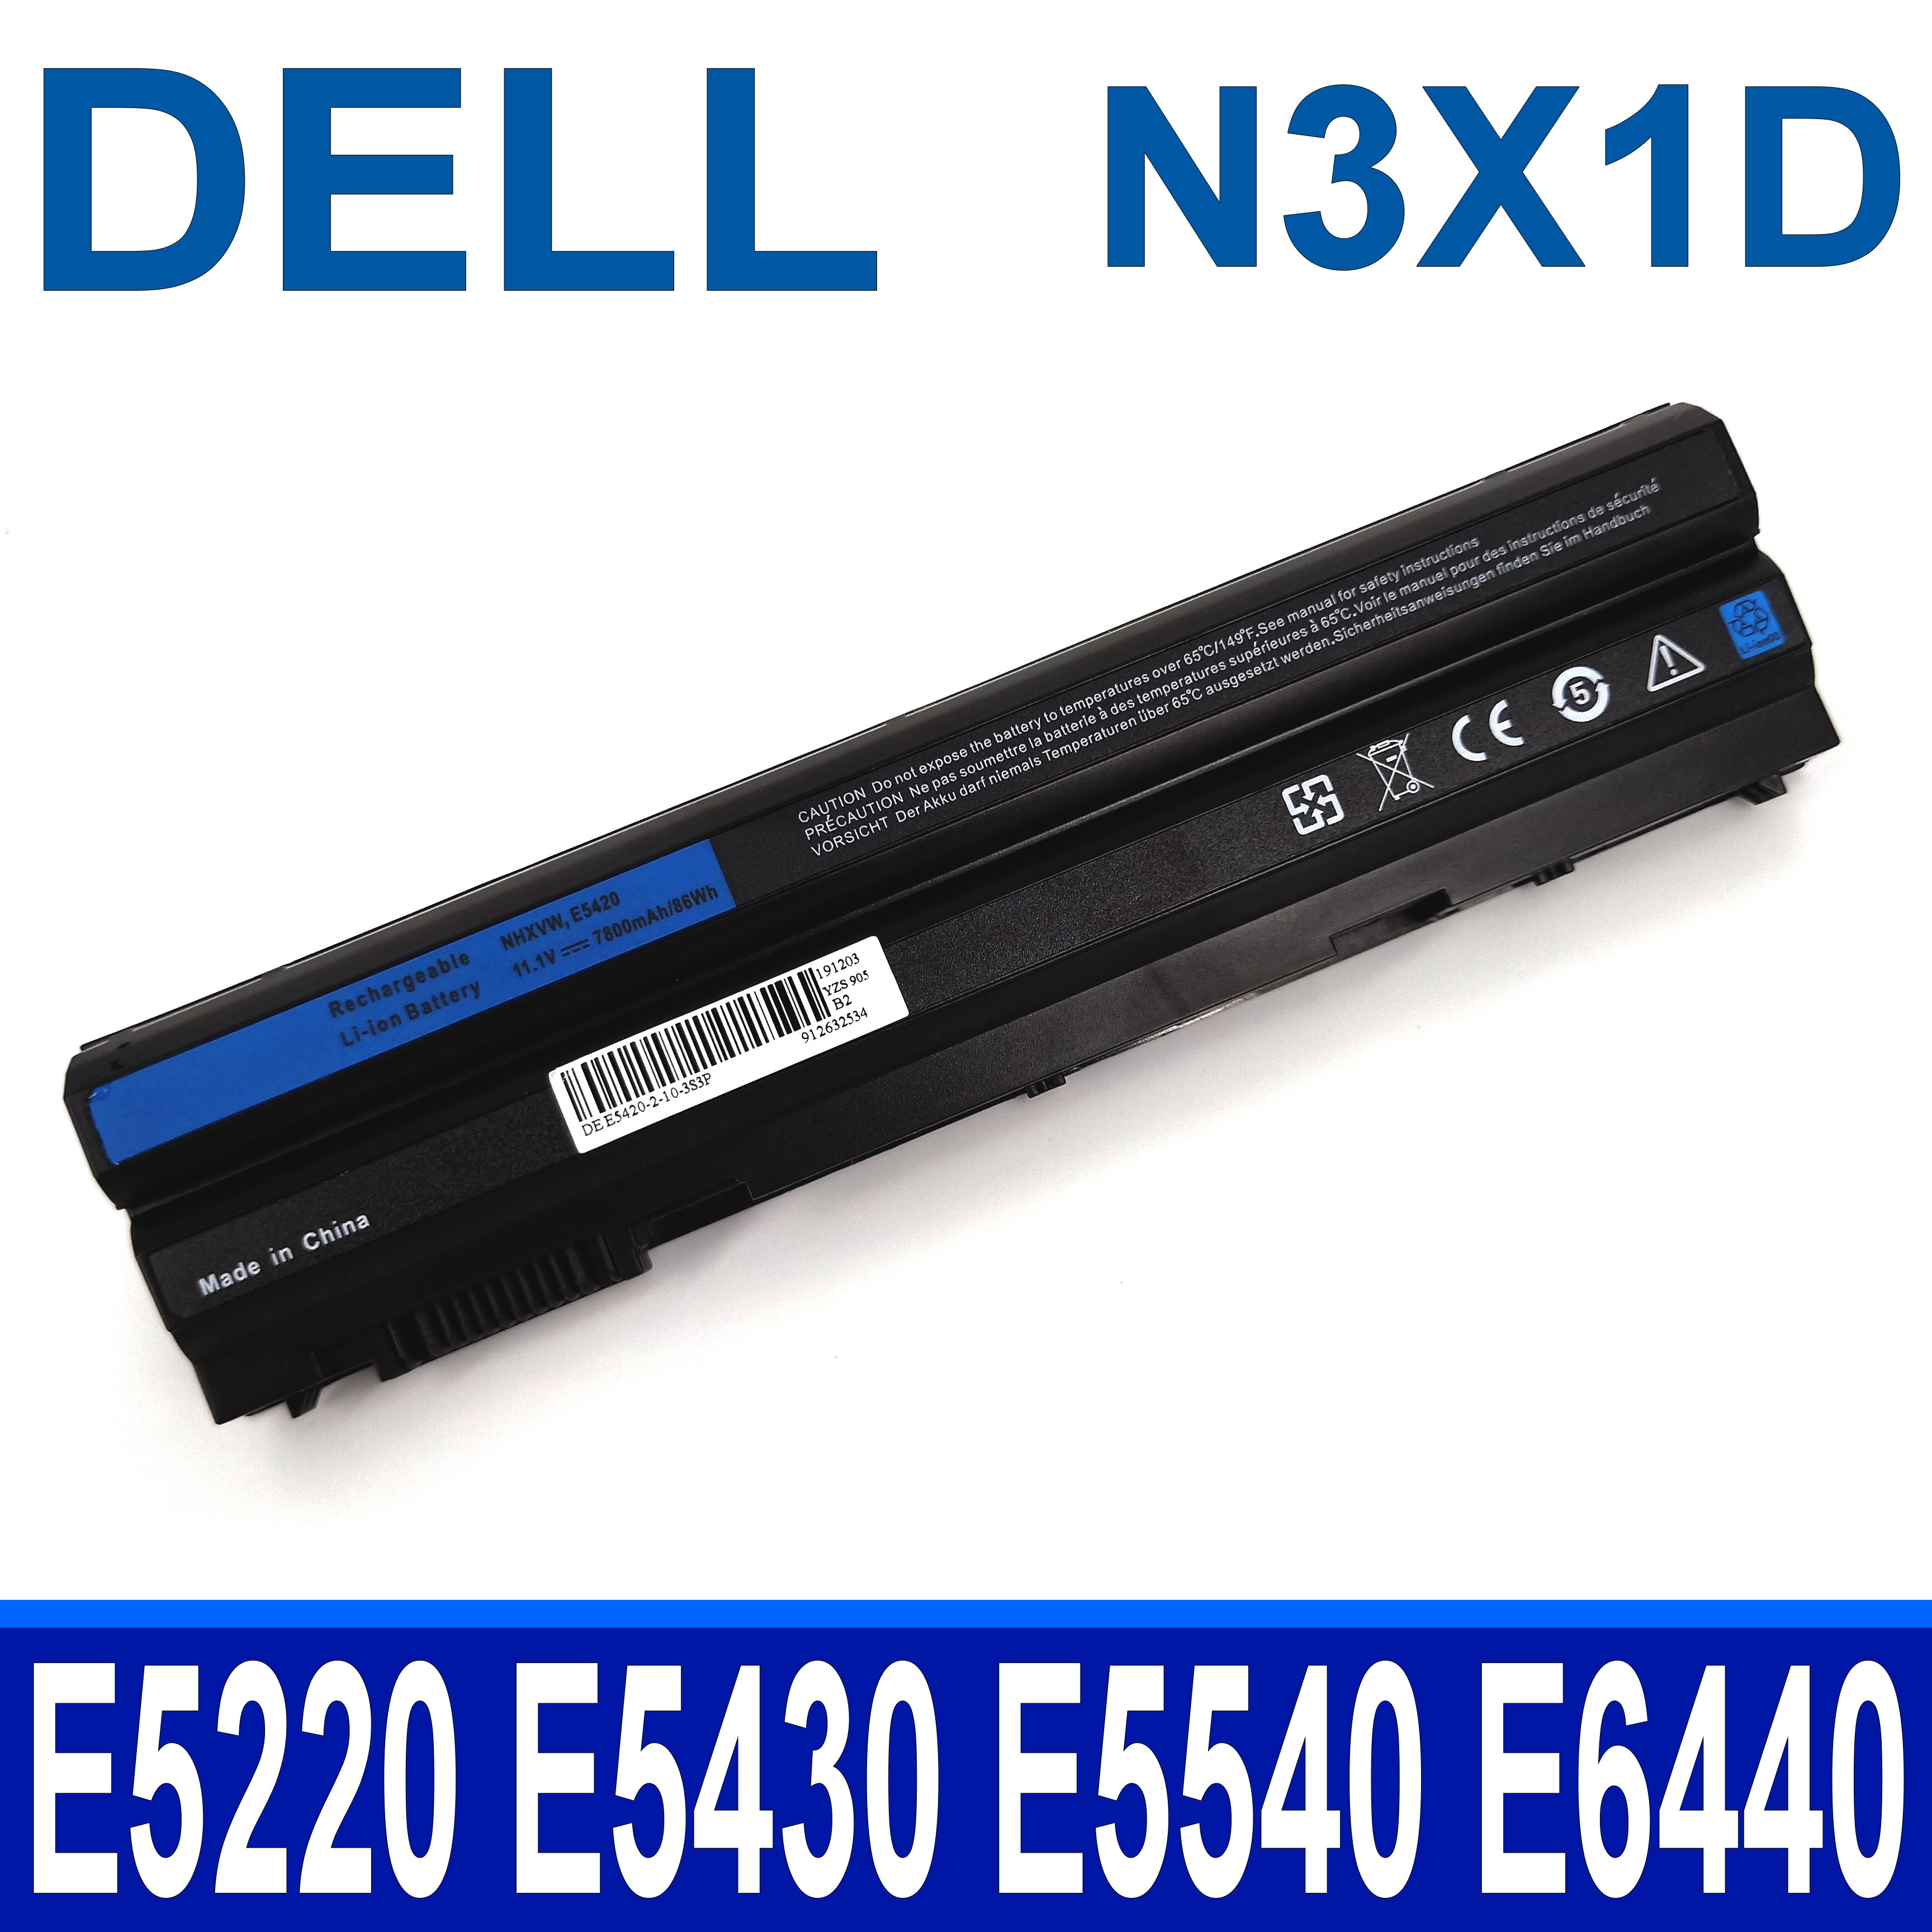 DELL N3X1D 原廠規格 電池 Inspiron N4720 Vostro 3460 3560 E6540 Latitude 15R 17R 5520 7520 5720 7720 E5220 E5420 E5420 E5430 E5520 E5520N E6540 E5520M E5530 E5540 E6420 E6430 E6440 E6520